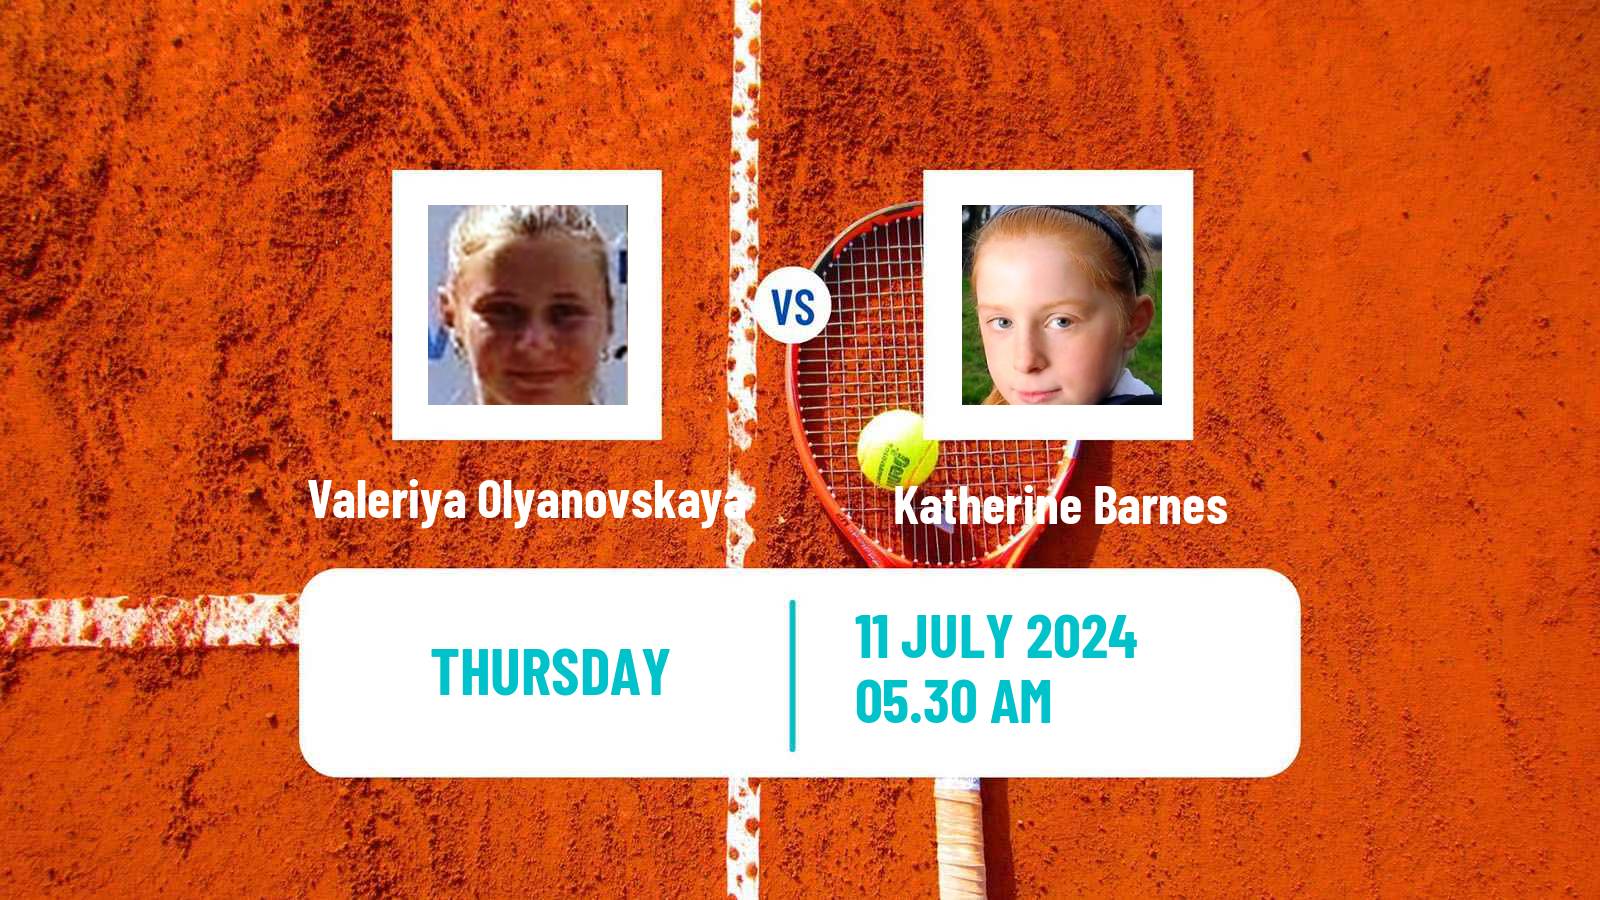 Tennis ITF W15 Grodzisk Mazowiecki Women Valeriya Olyanovskaya - Katherine Barnes